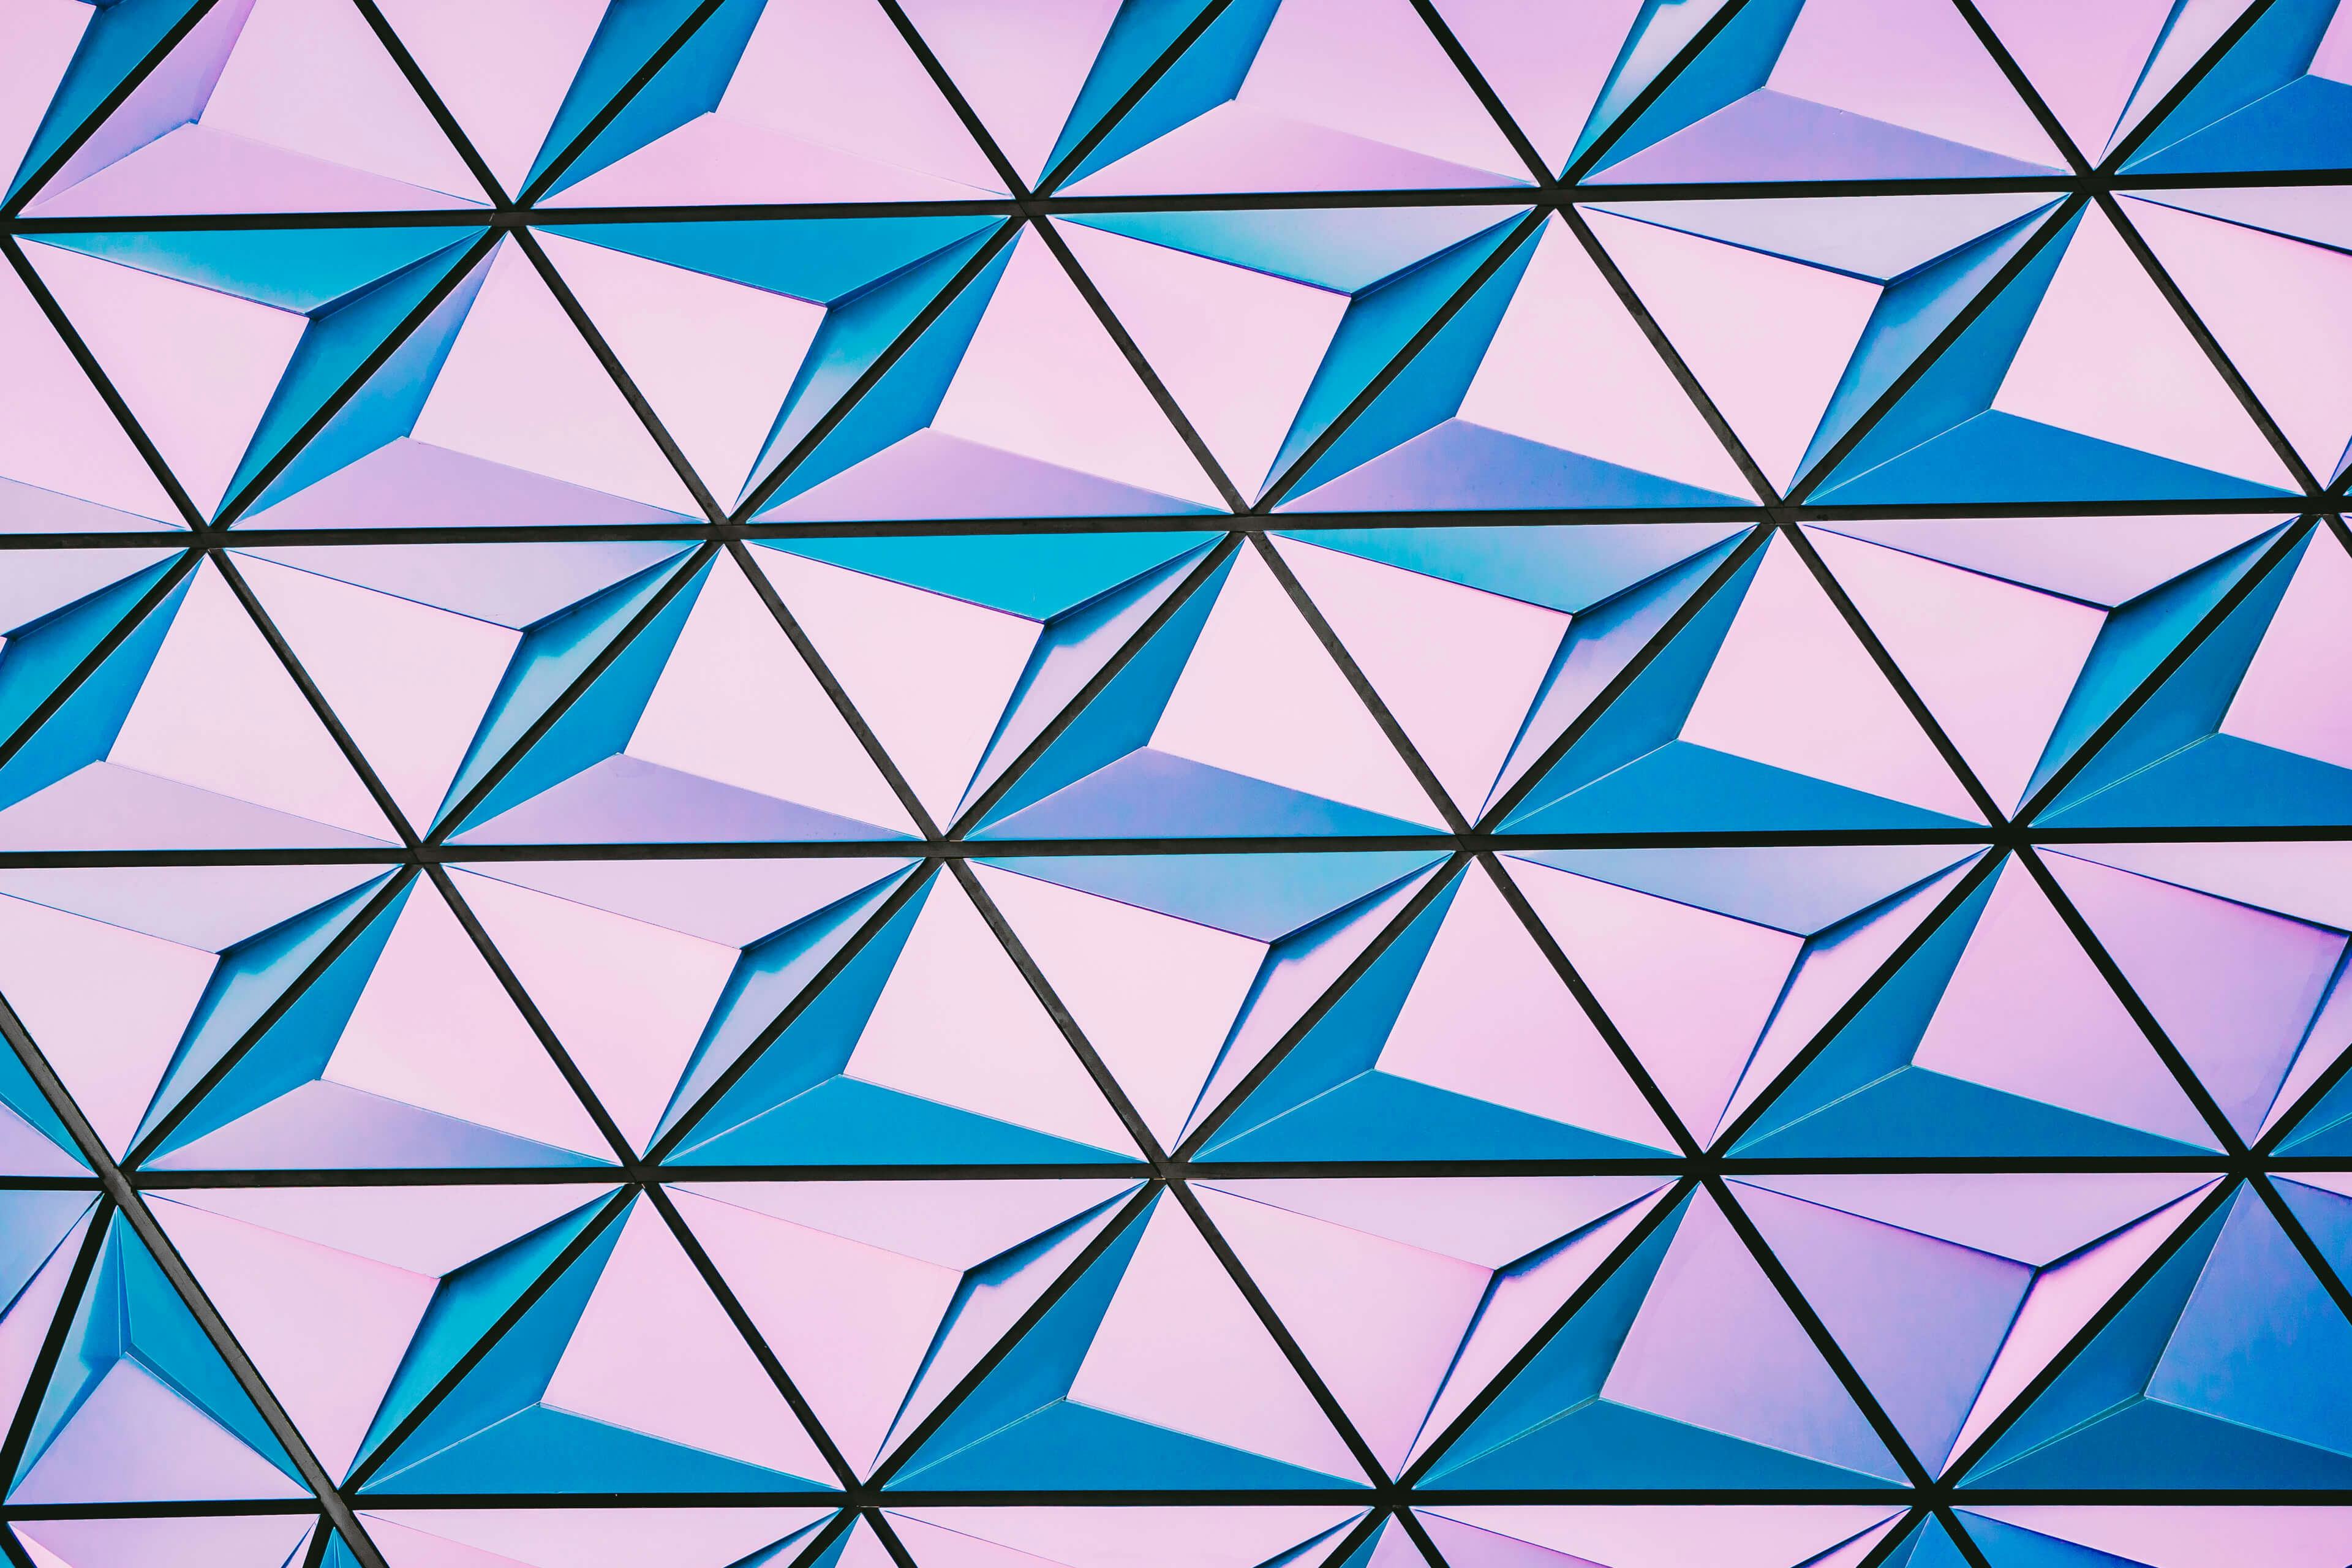 Geometric triangular pattern rendered in 3D